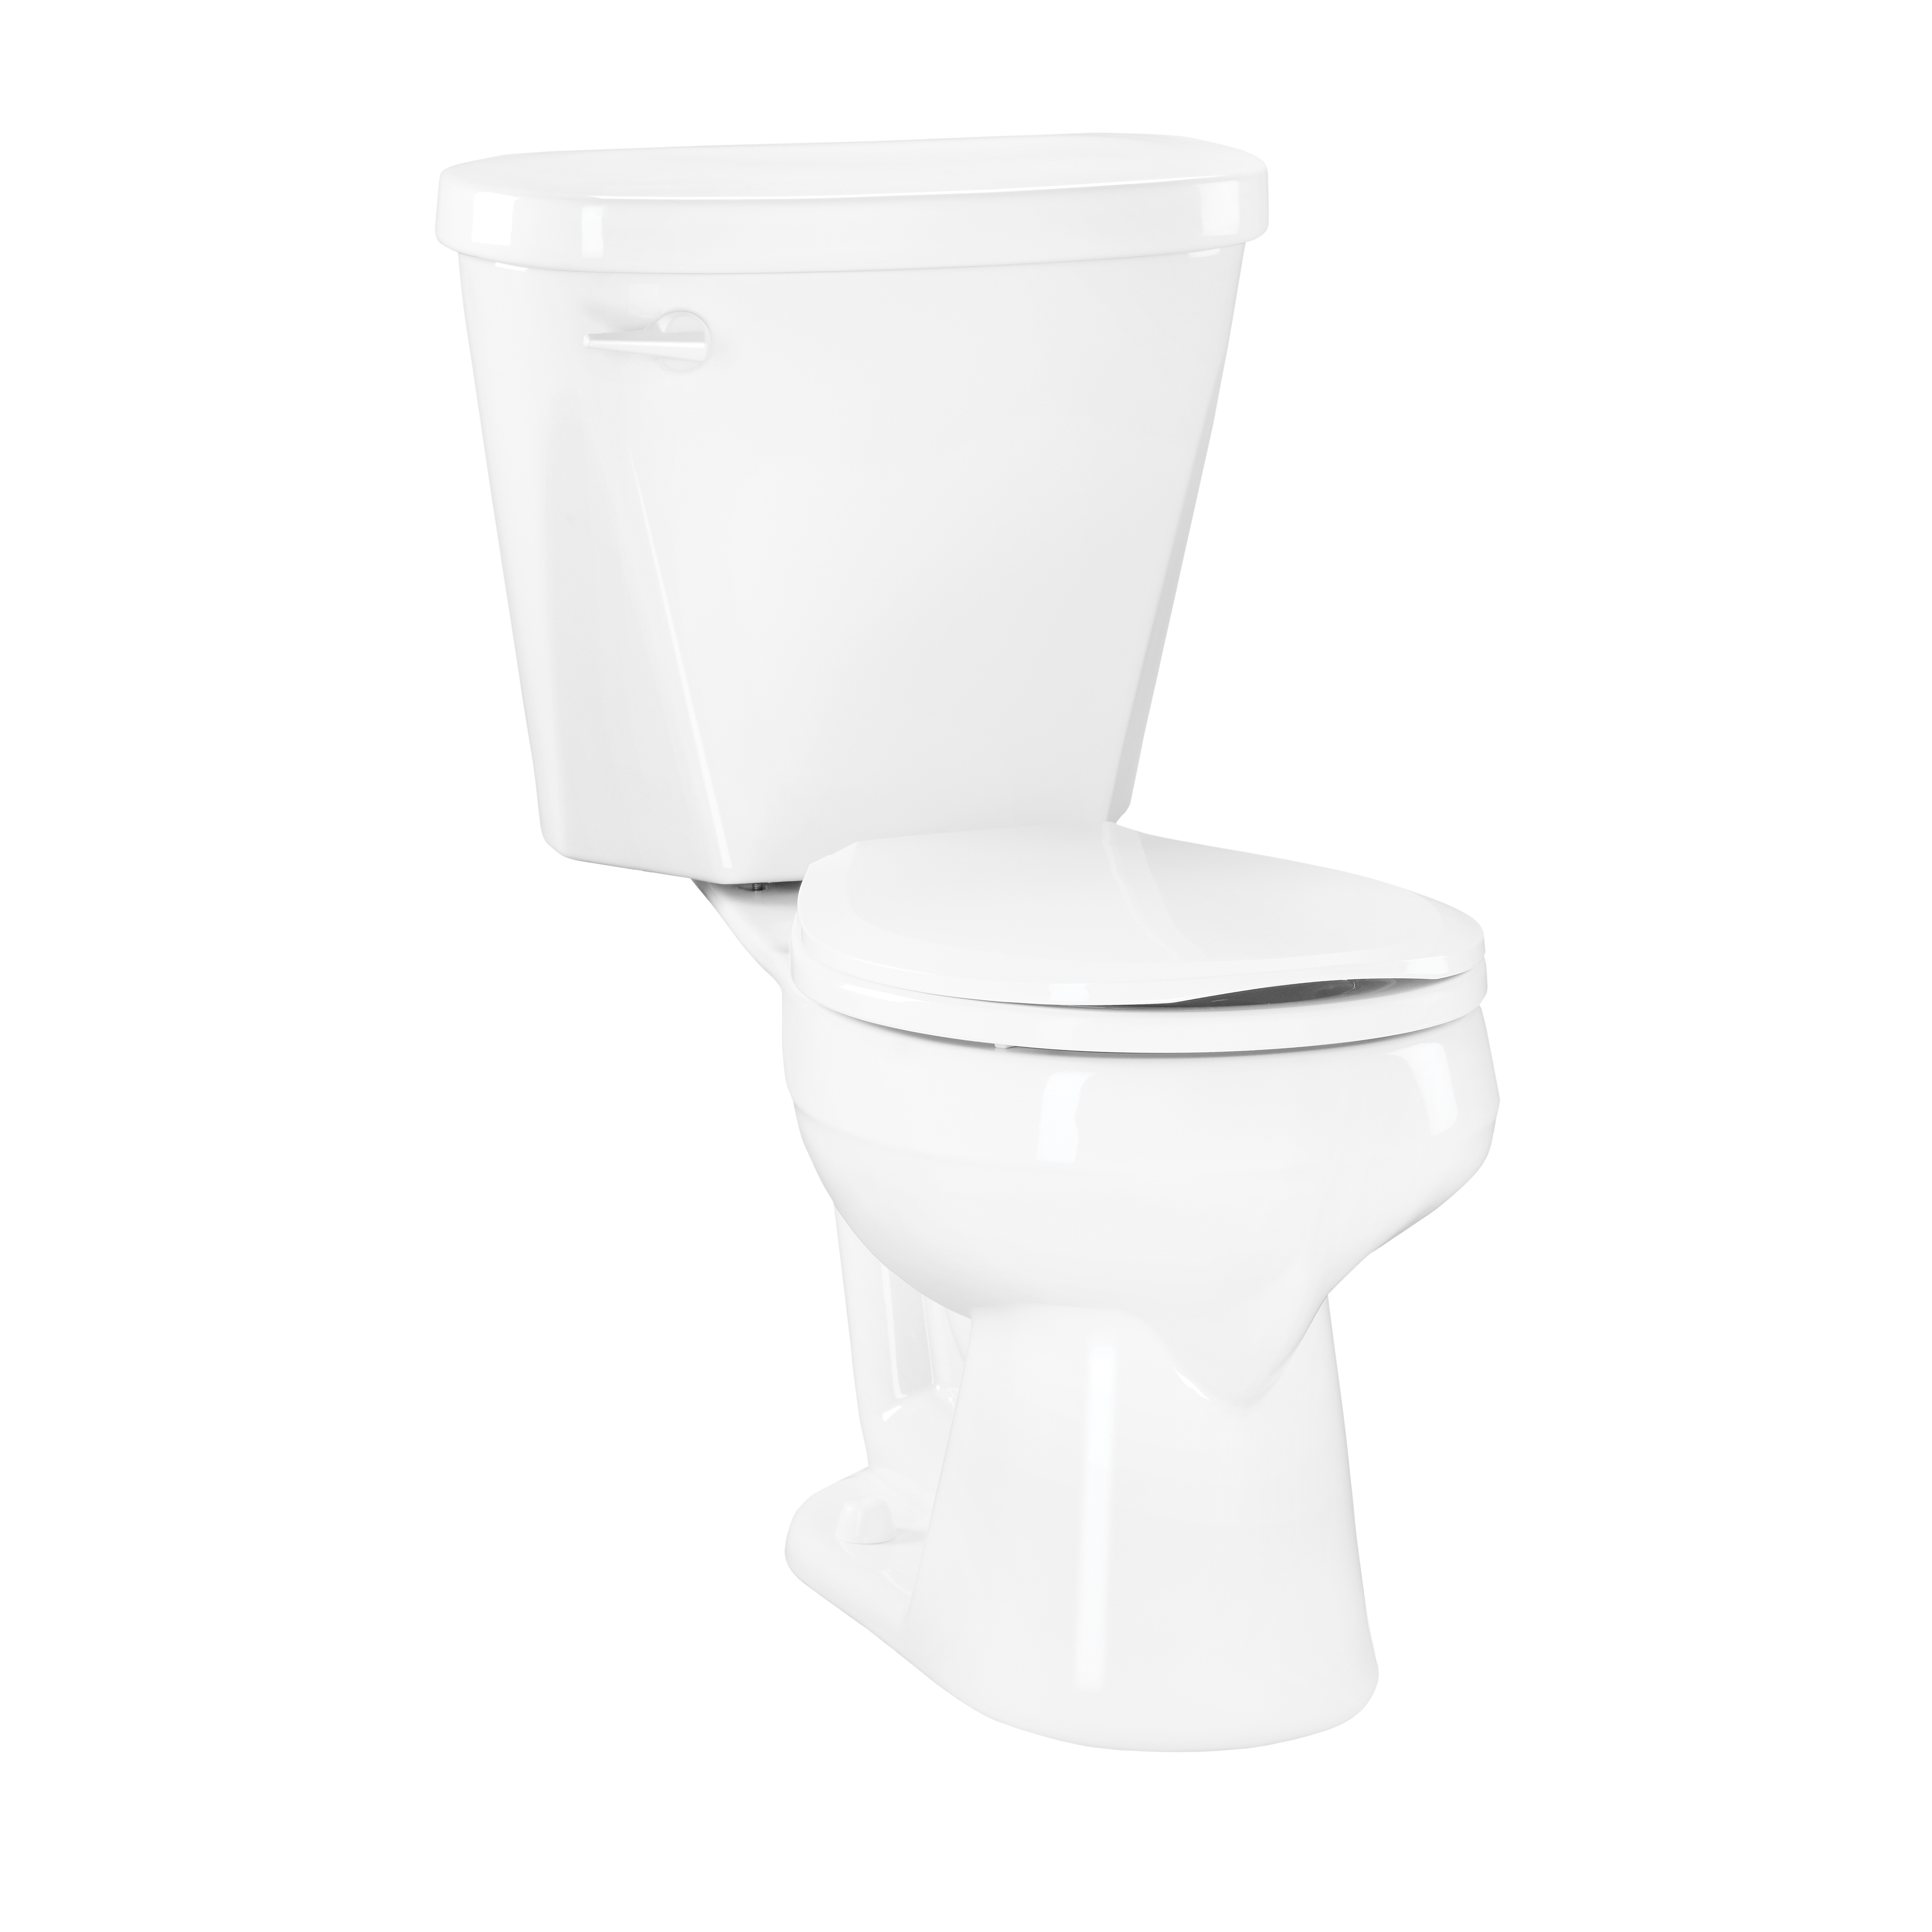 CAD Drawings BIM Models Mansfield Plumbing Products LLC Summit® Pro Toilets